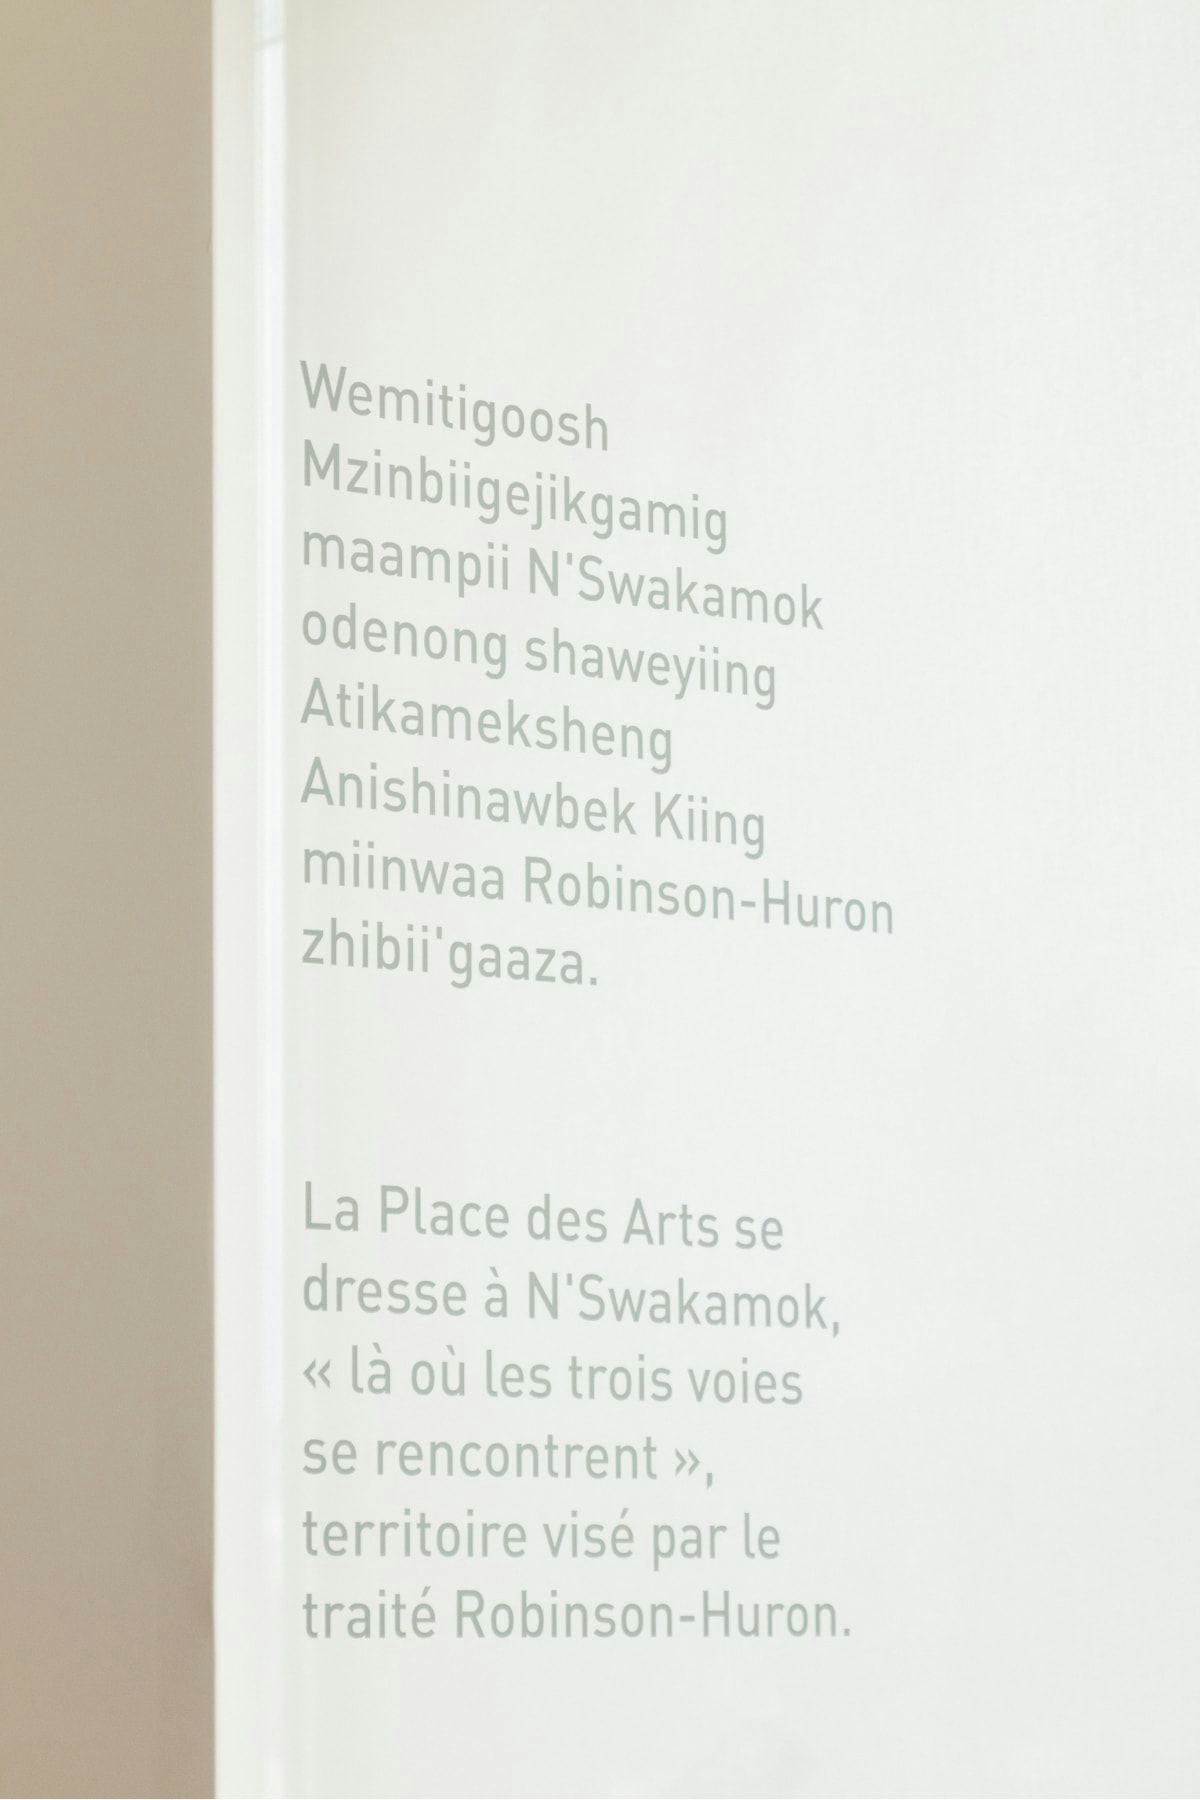 Land acknowledgement decals at Place des Arts